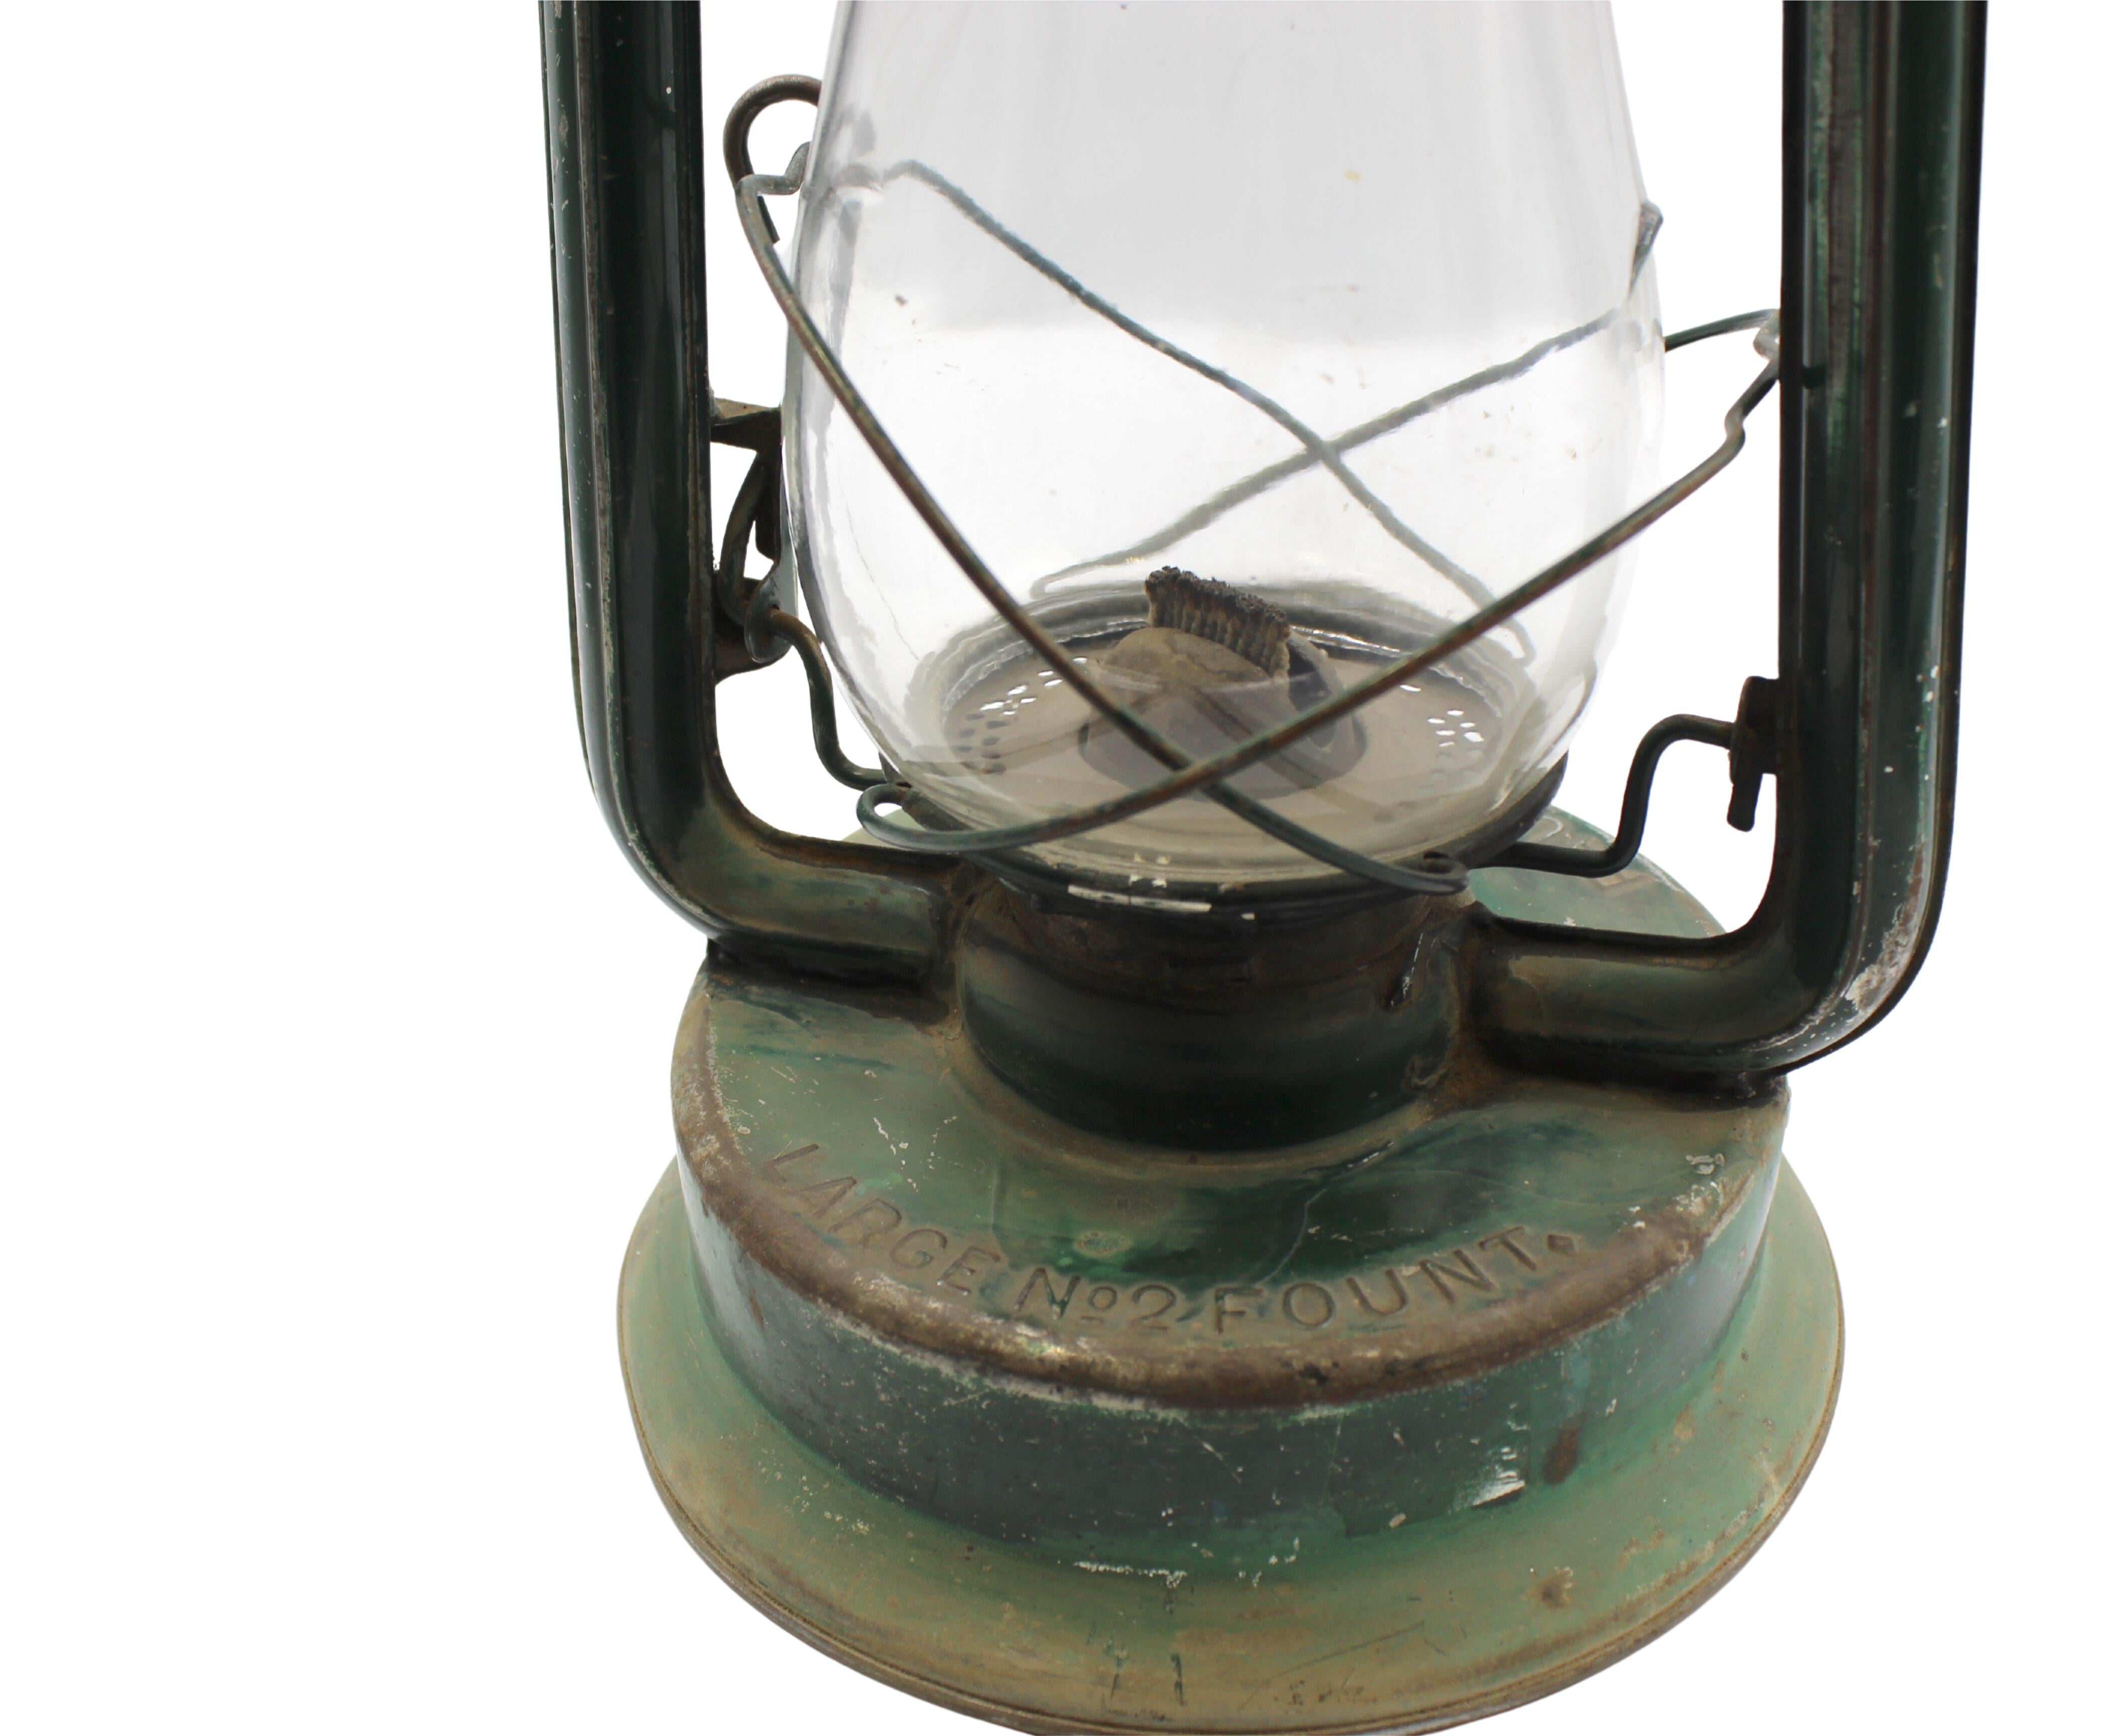 paull's lantern